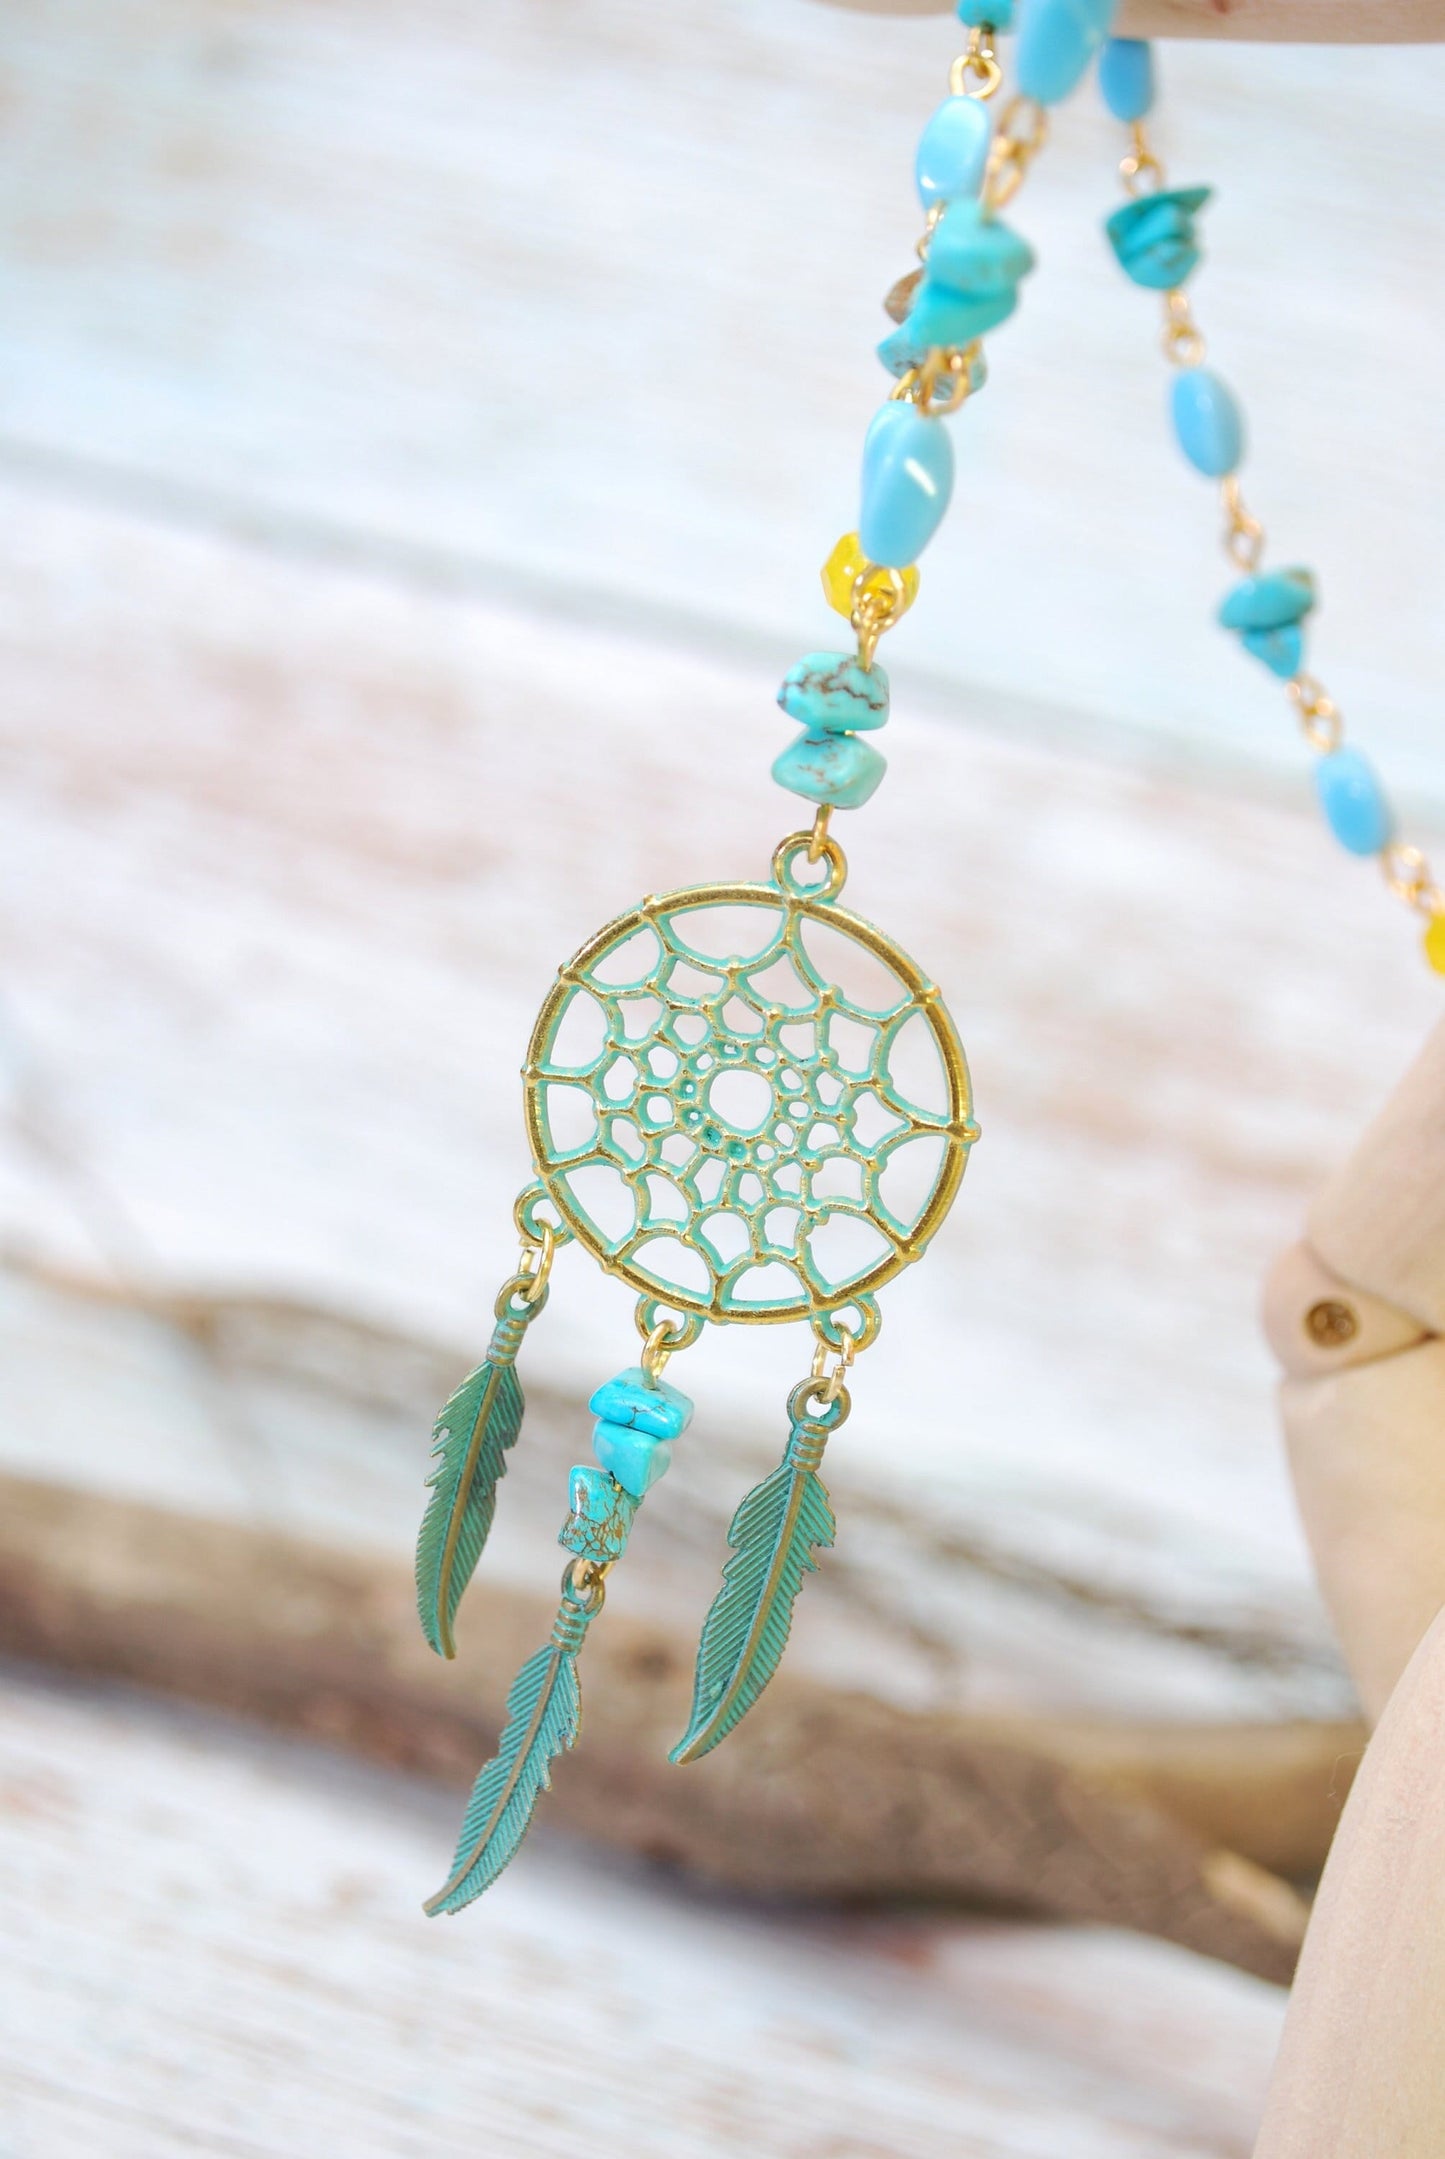 Spiritual Native American-Inspired Gold Pendant Necklace featuring Turquoise Quartz Stone and Beaded Feathers.  Estibeela design. 20"